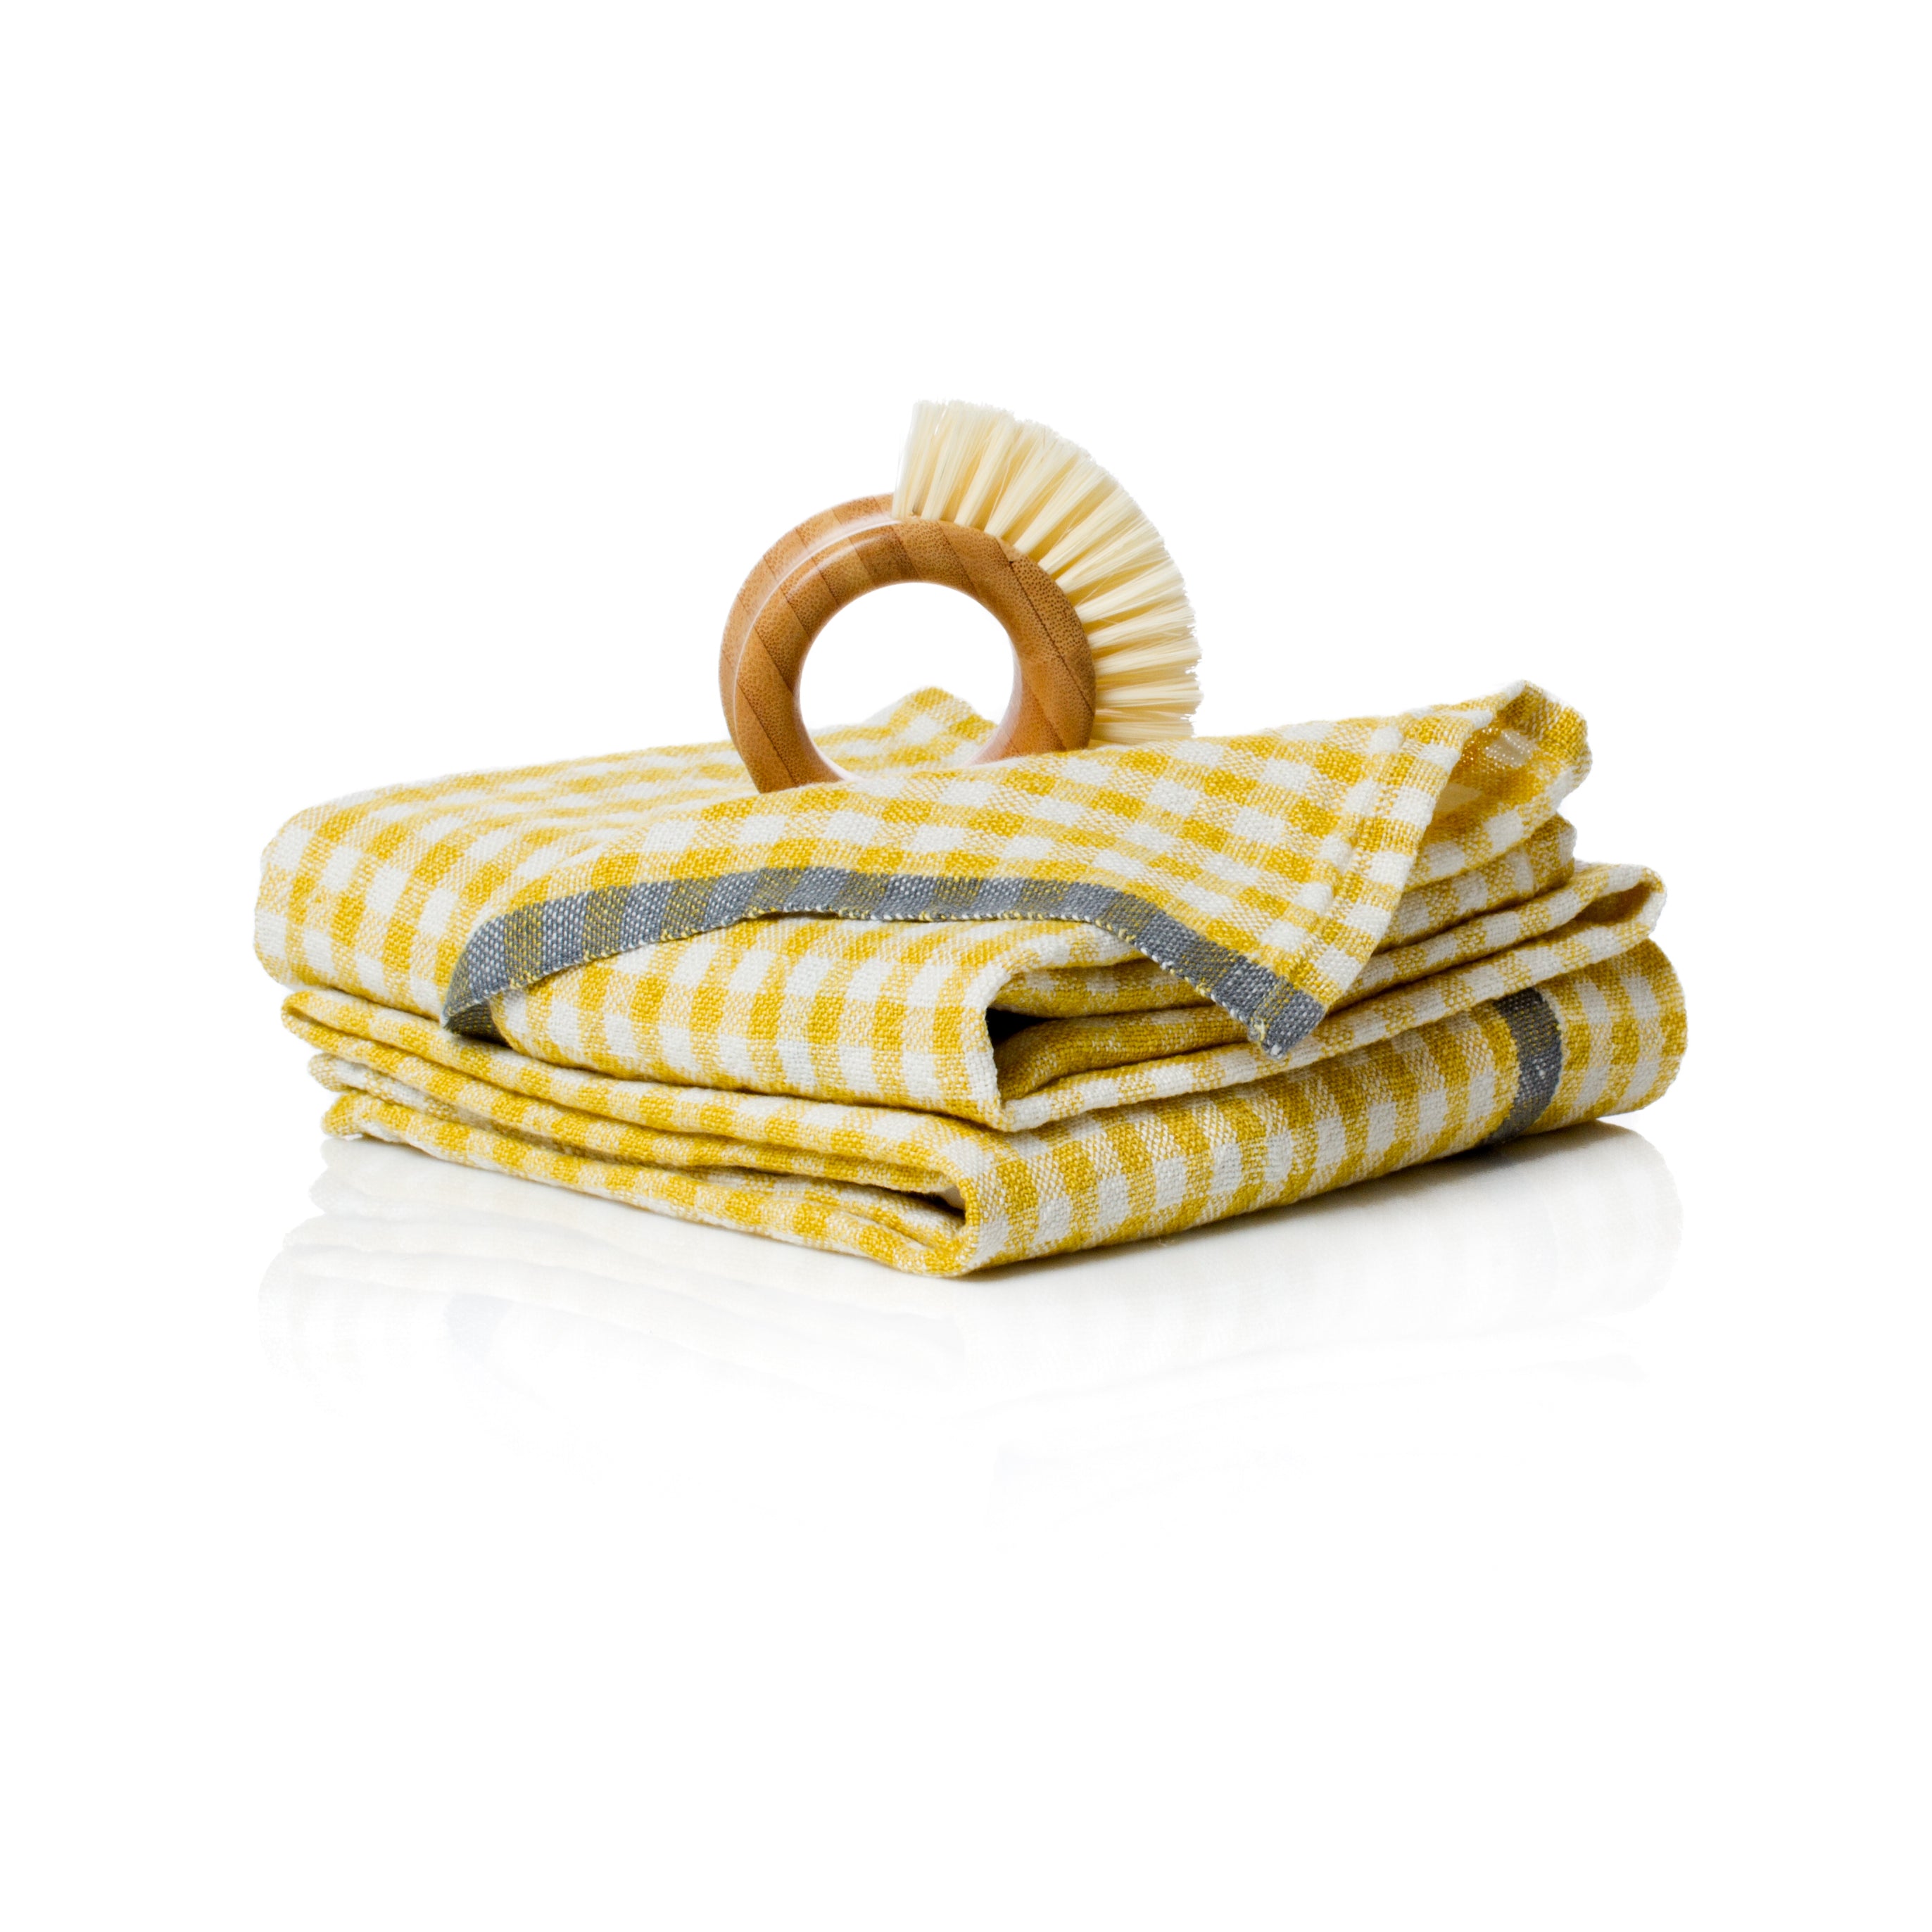 Gingham Linen Dish Towel - Cinnamon –